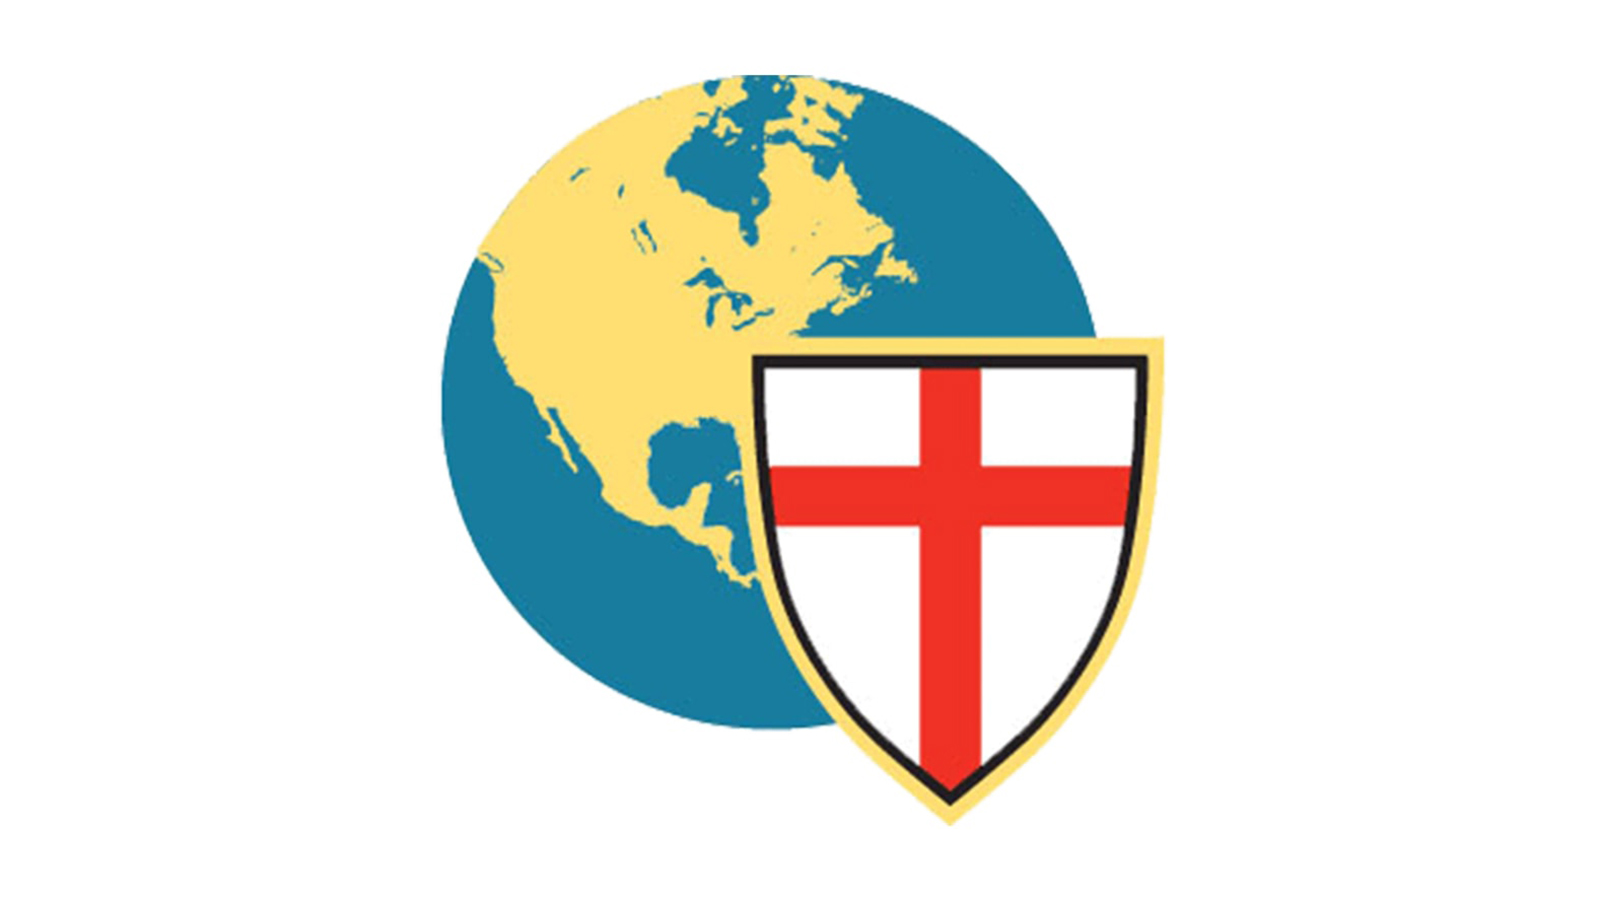 The Anglican Church in North America logo. Courtesy image